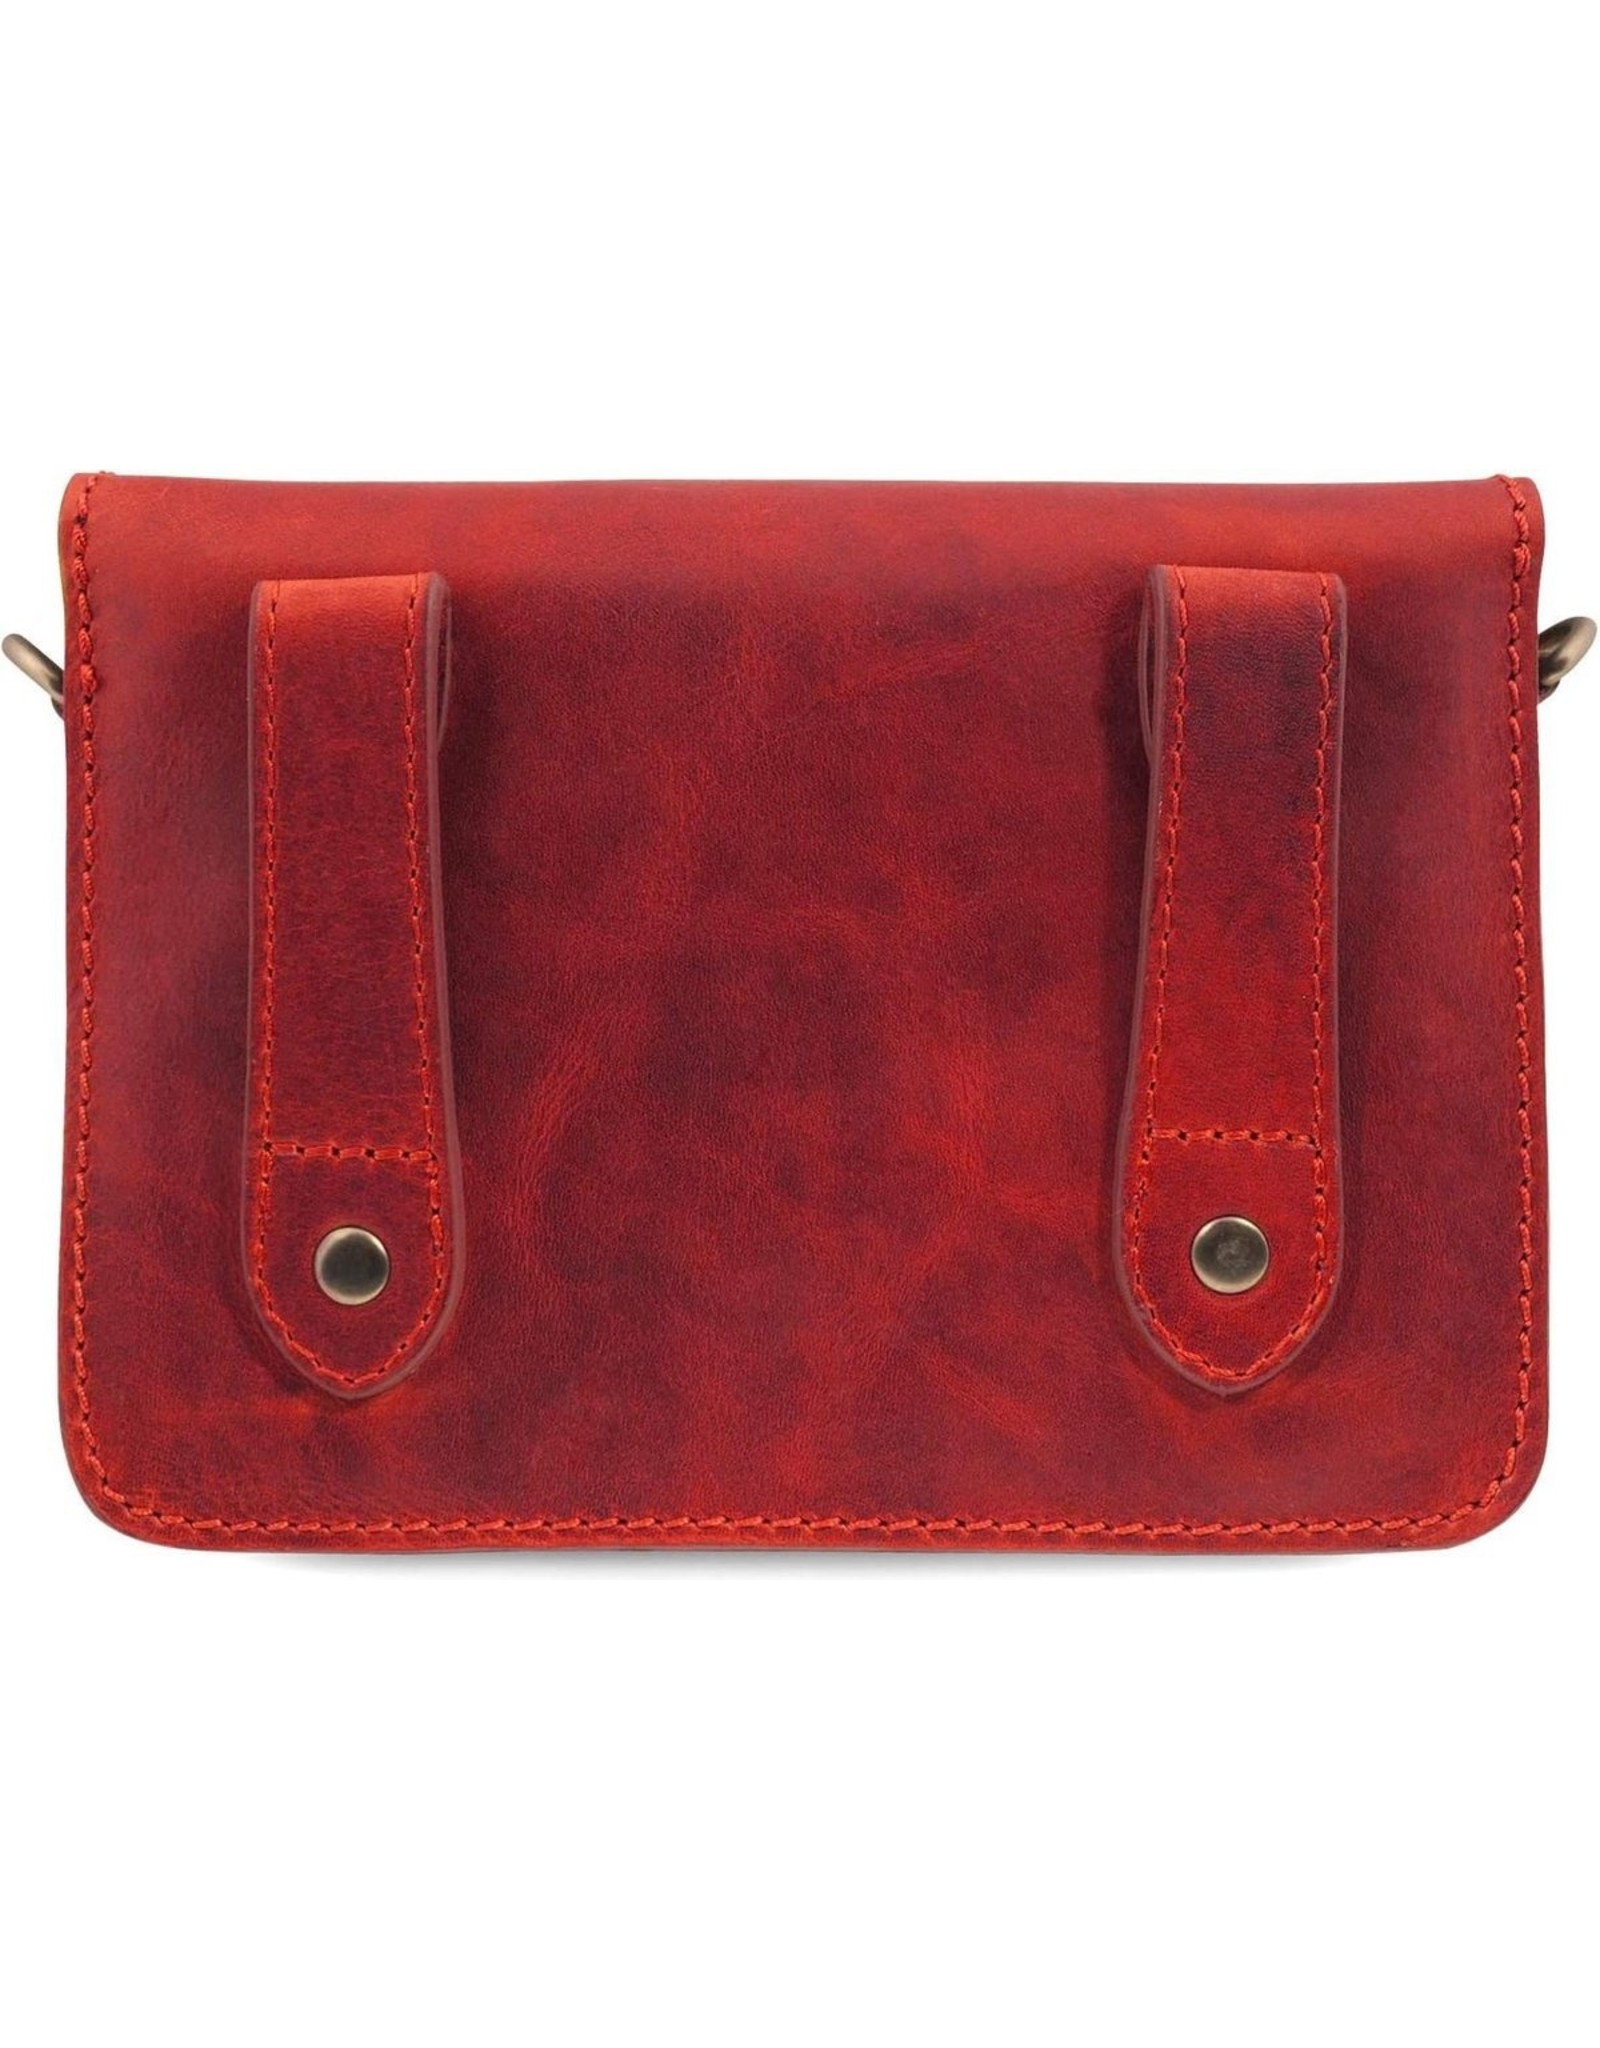 HillBurry Leather bags - HillBurry Leather Shoulder Bag Festival Bag Red